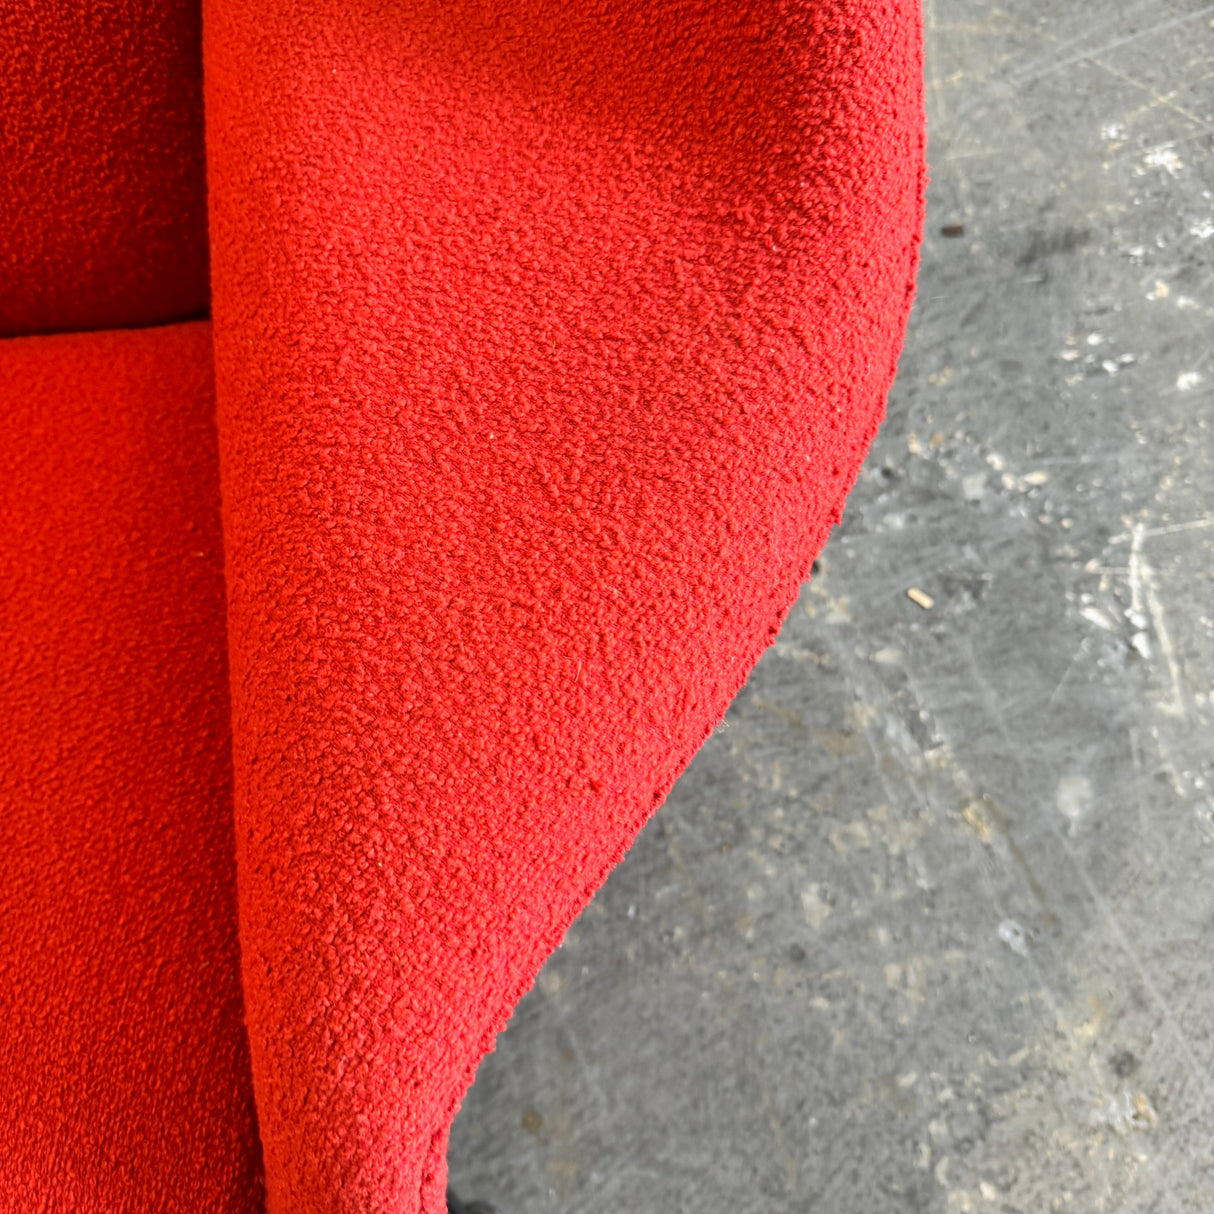 Authentic! Knoll Eero Saarinen Womb chair in Crimson Boucle upholstery